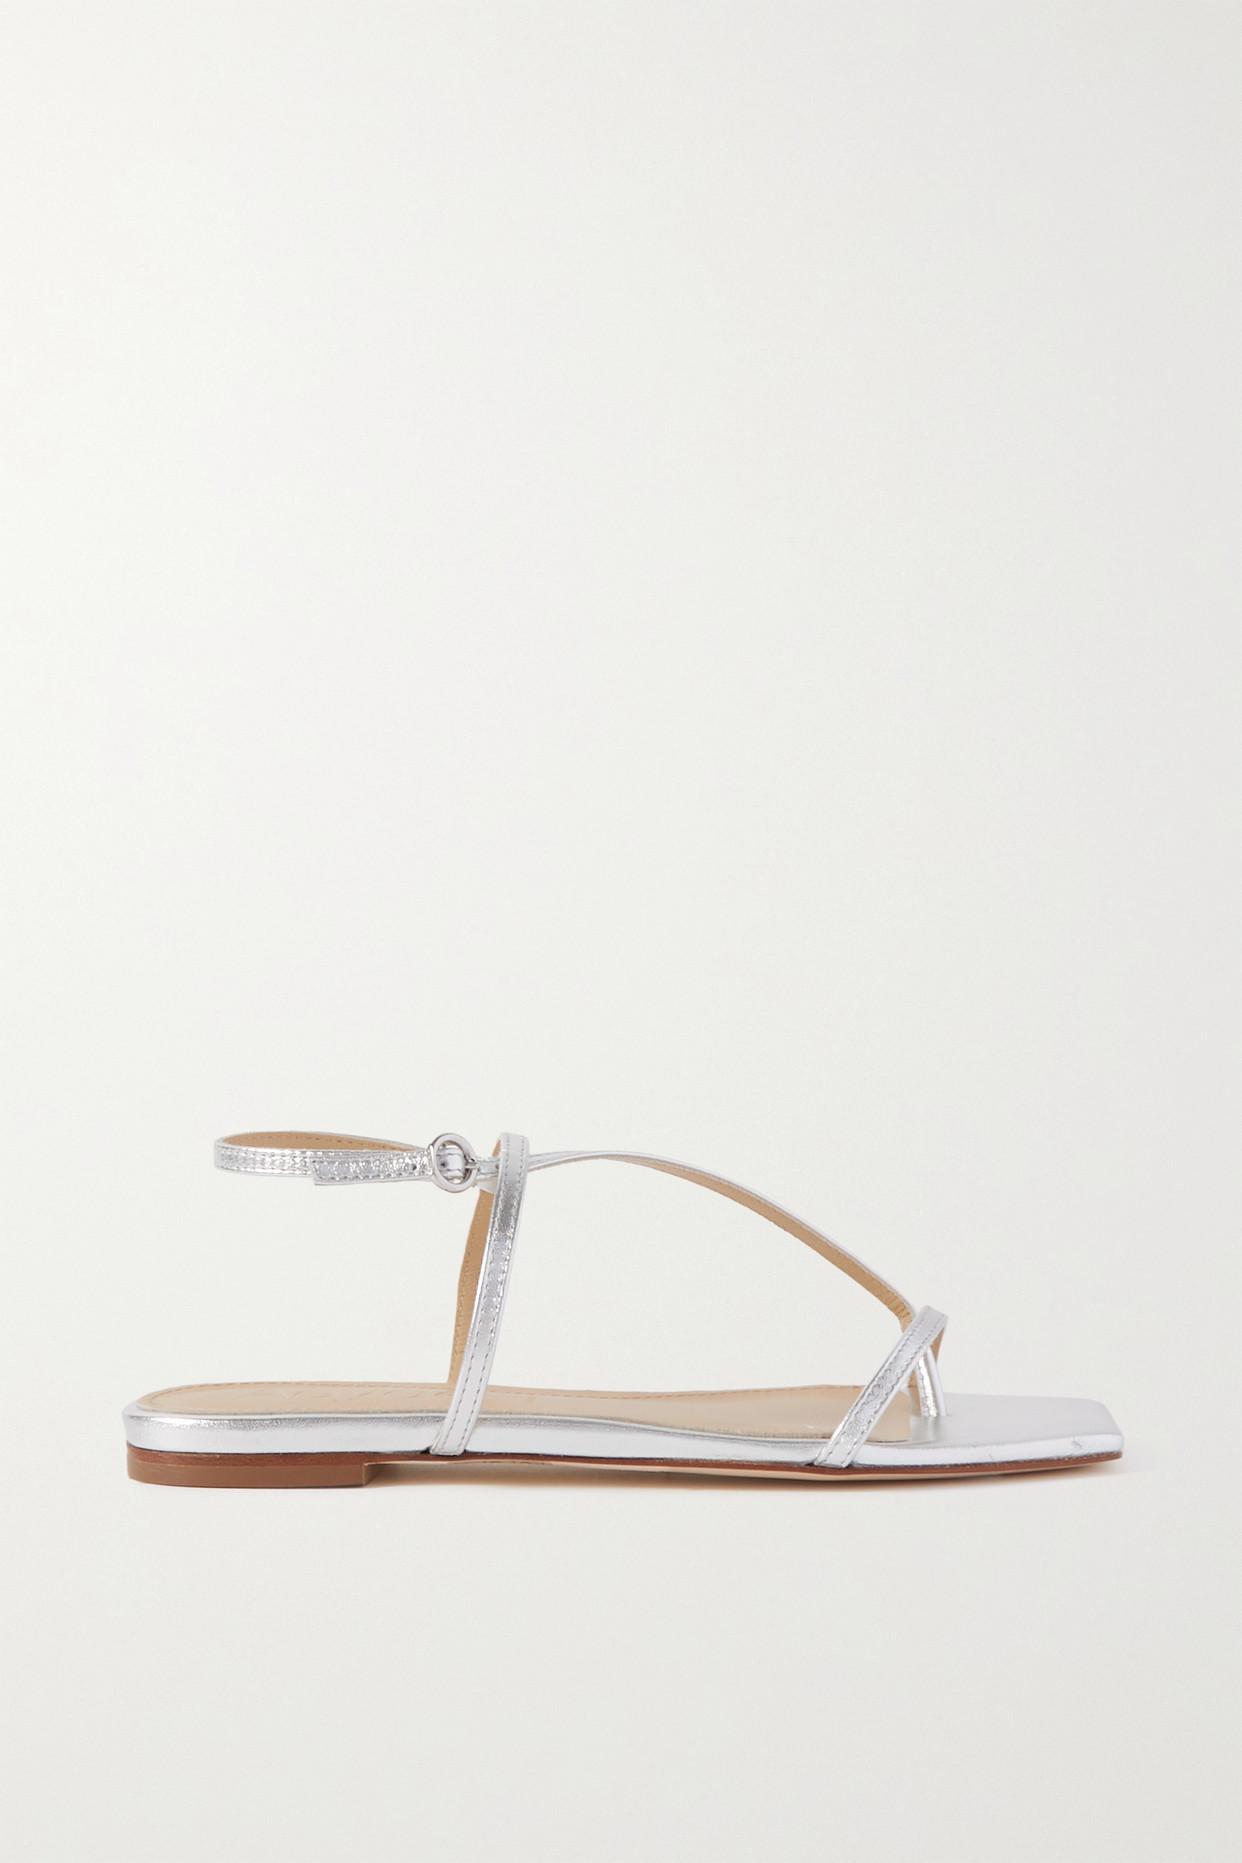 Aeyde Ella Metallic Leather Sandals in White | Lyst